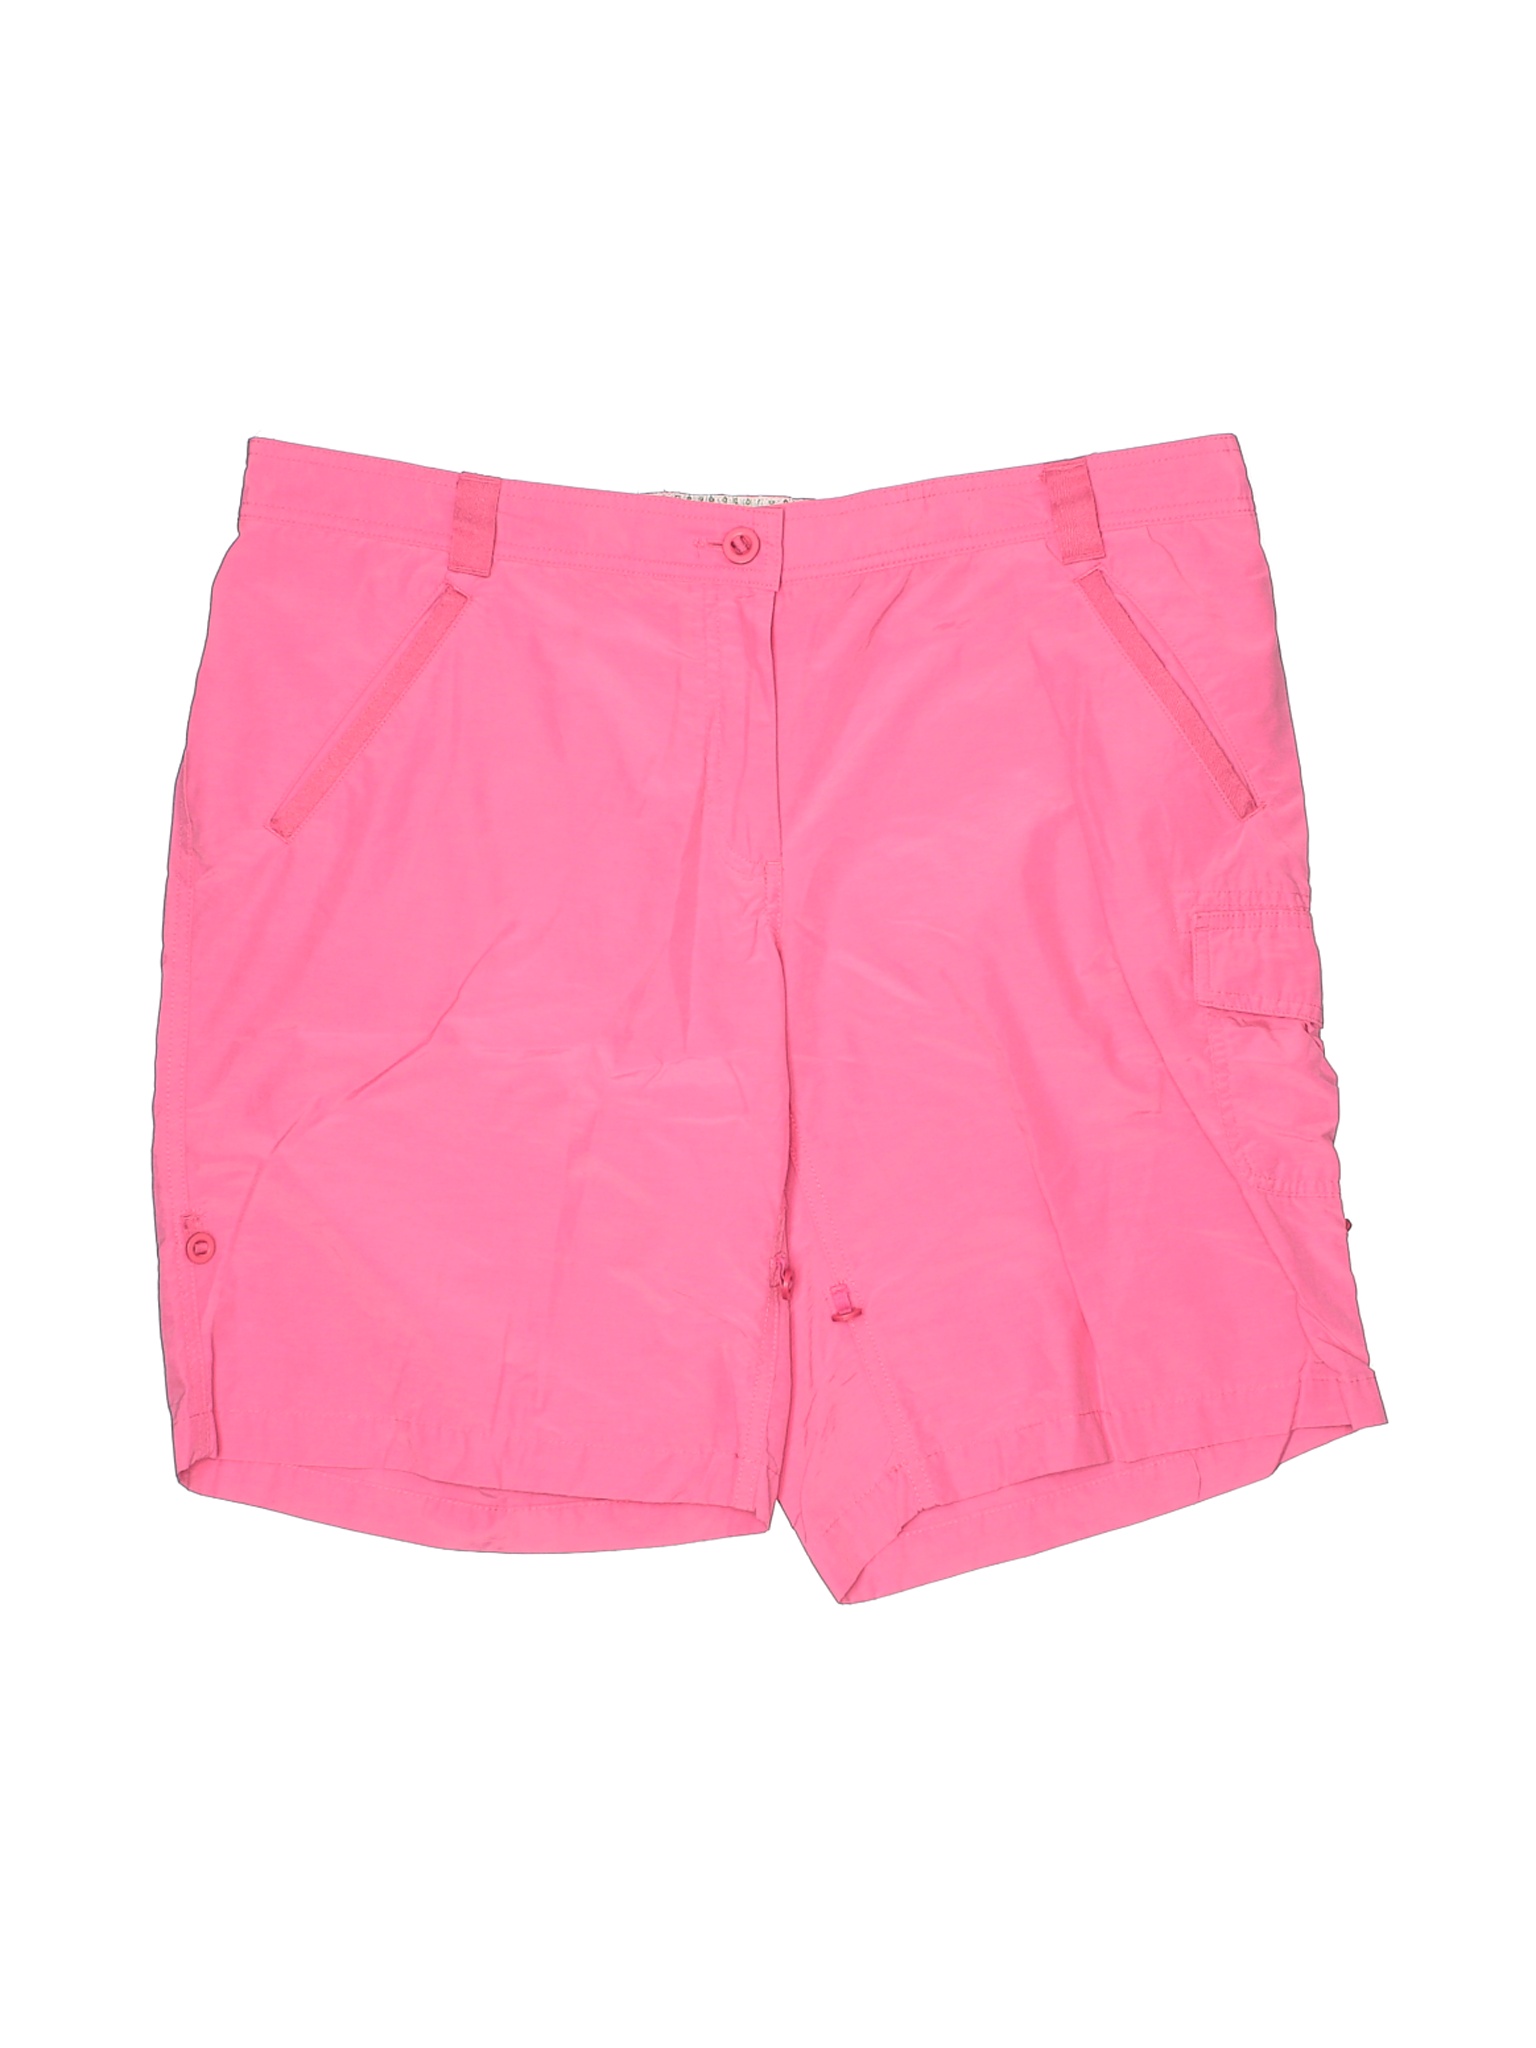 Lands' End Women Pink Cargo Shorts 18 Plus | eBay